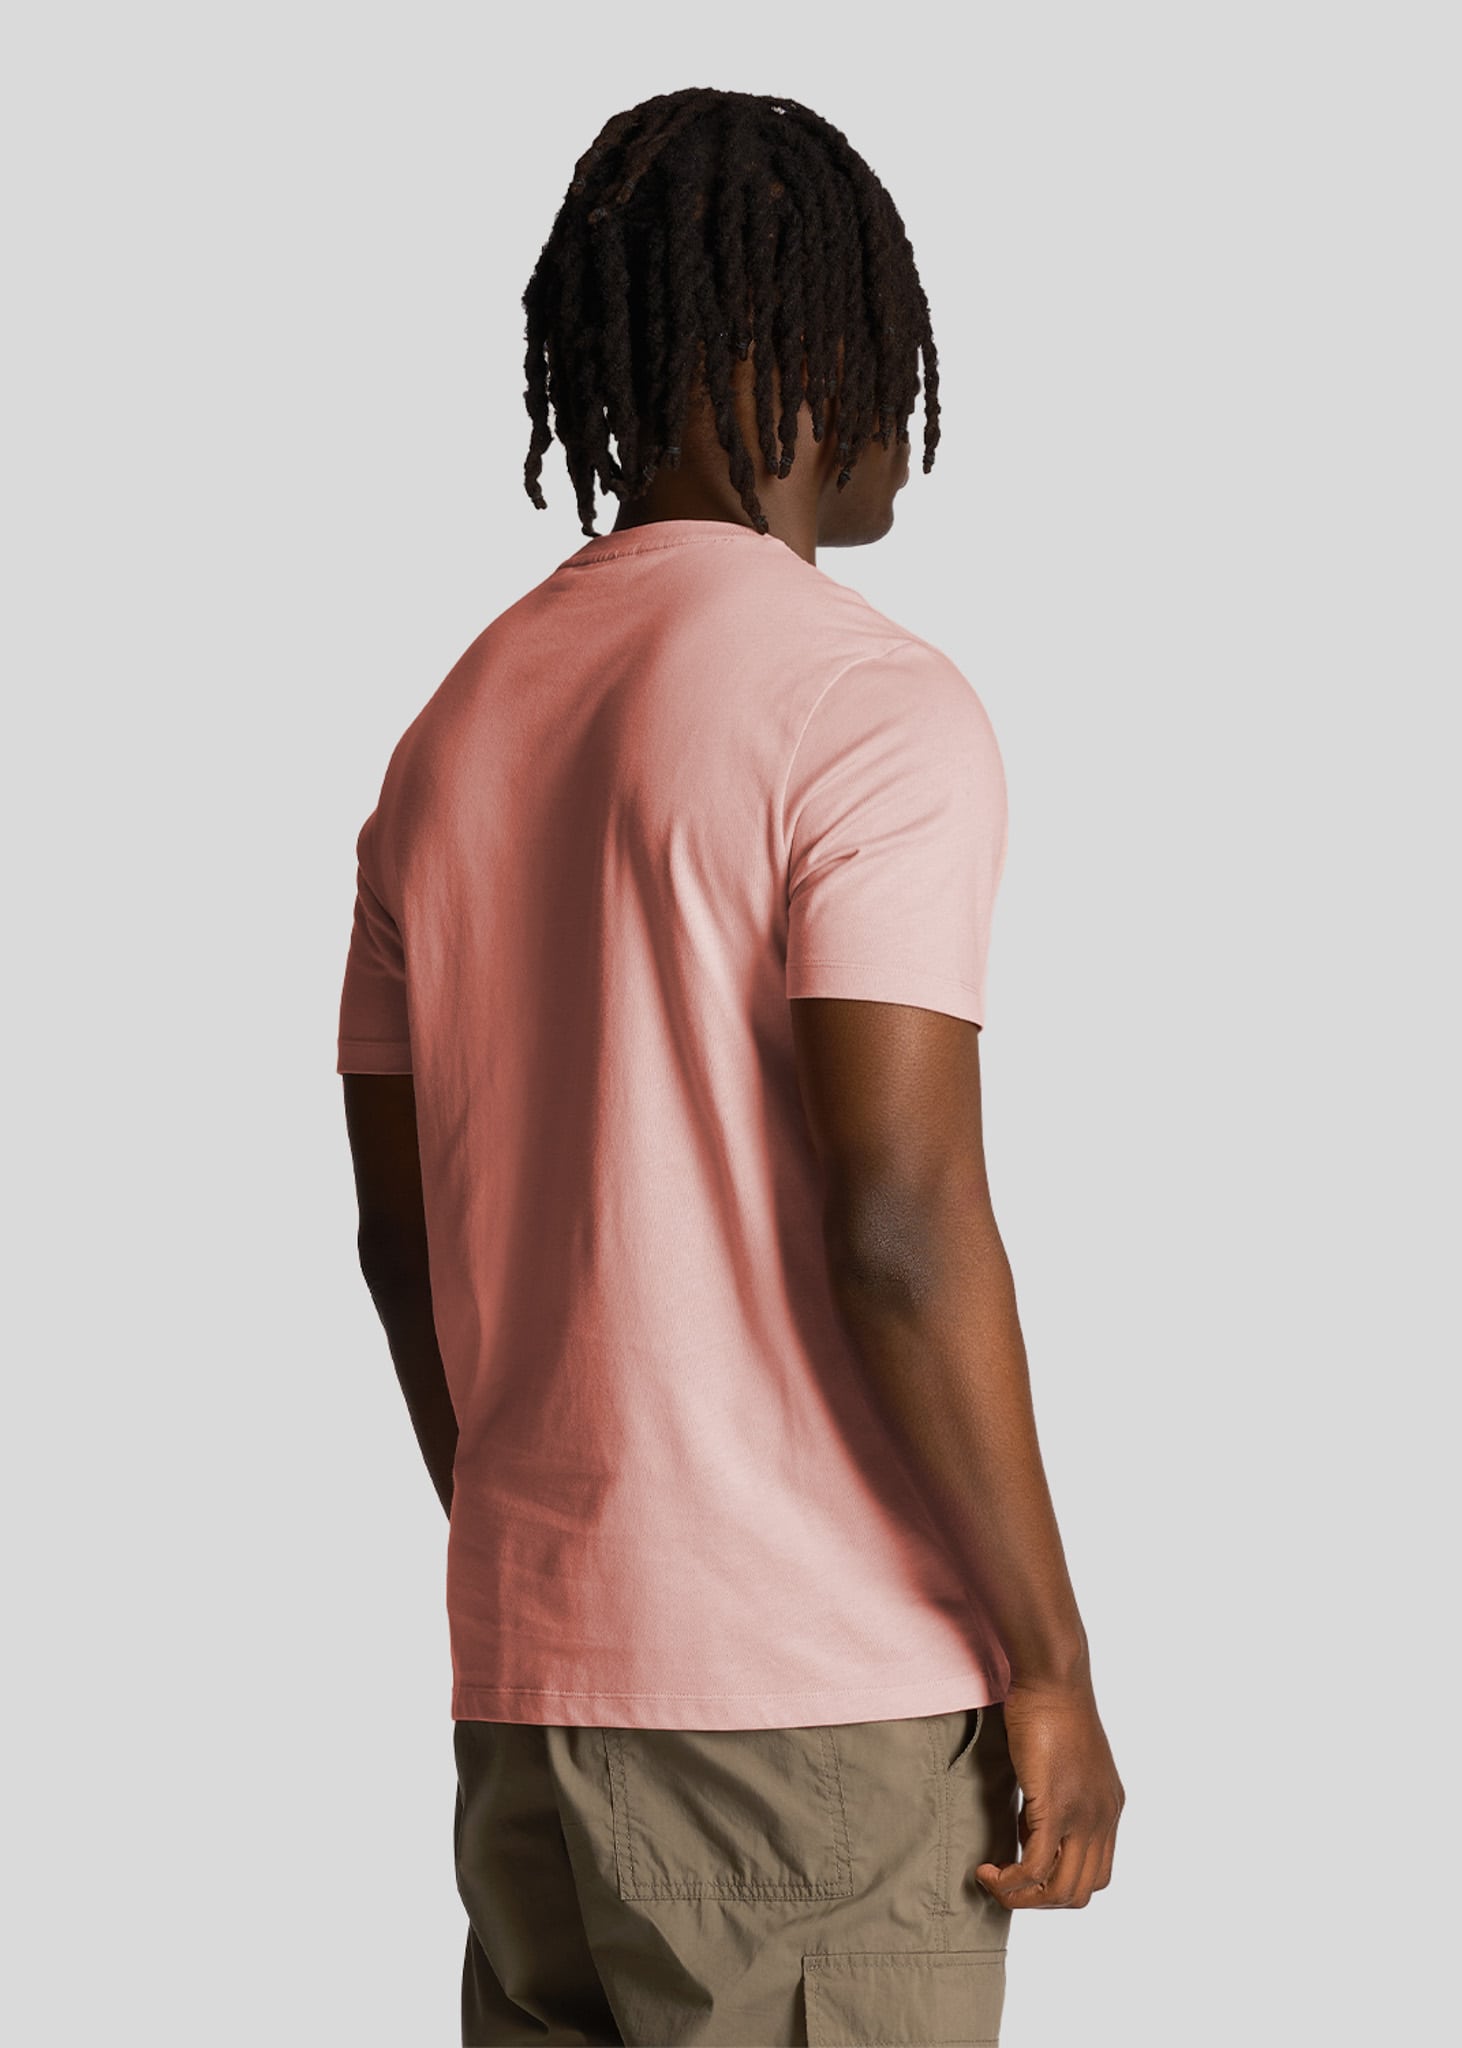 Lyle & Scott T-shirts  Pocket t-shirt - palm pink 